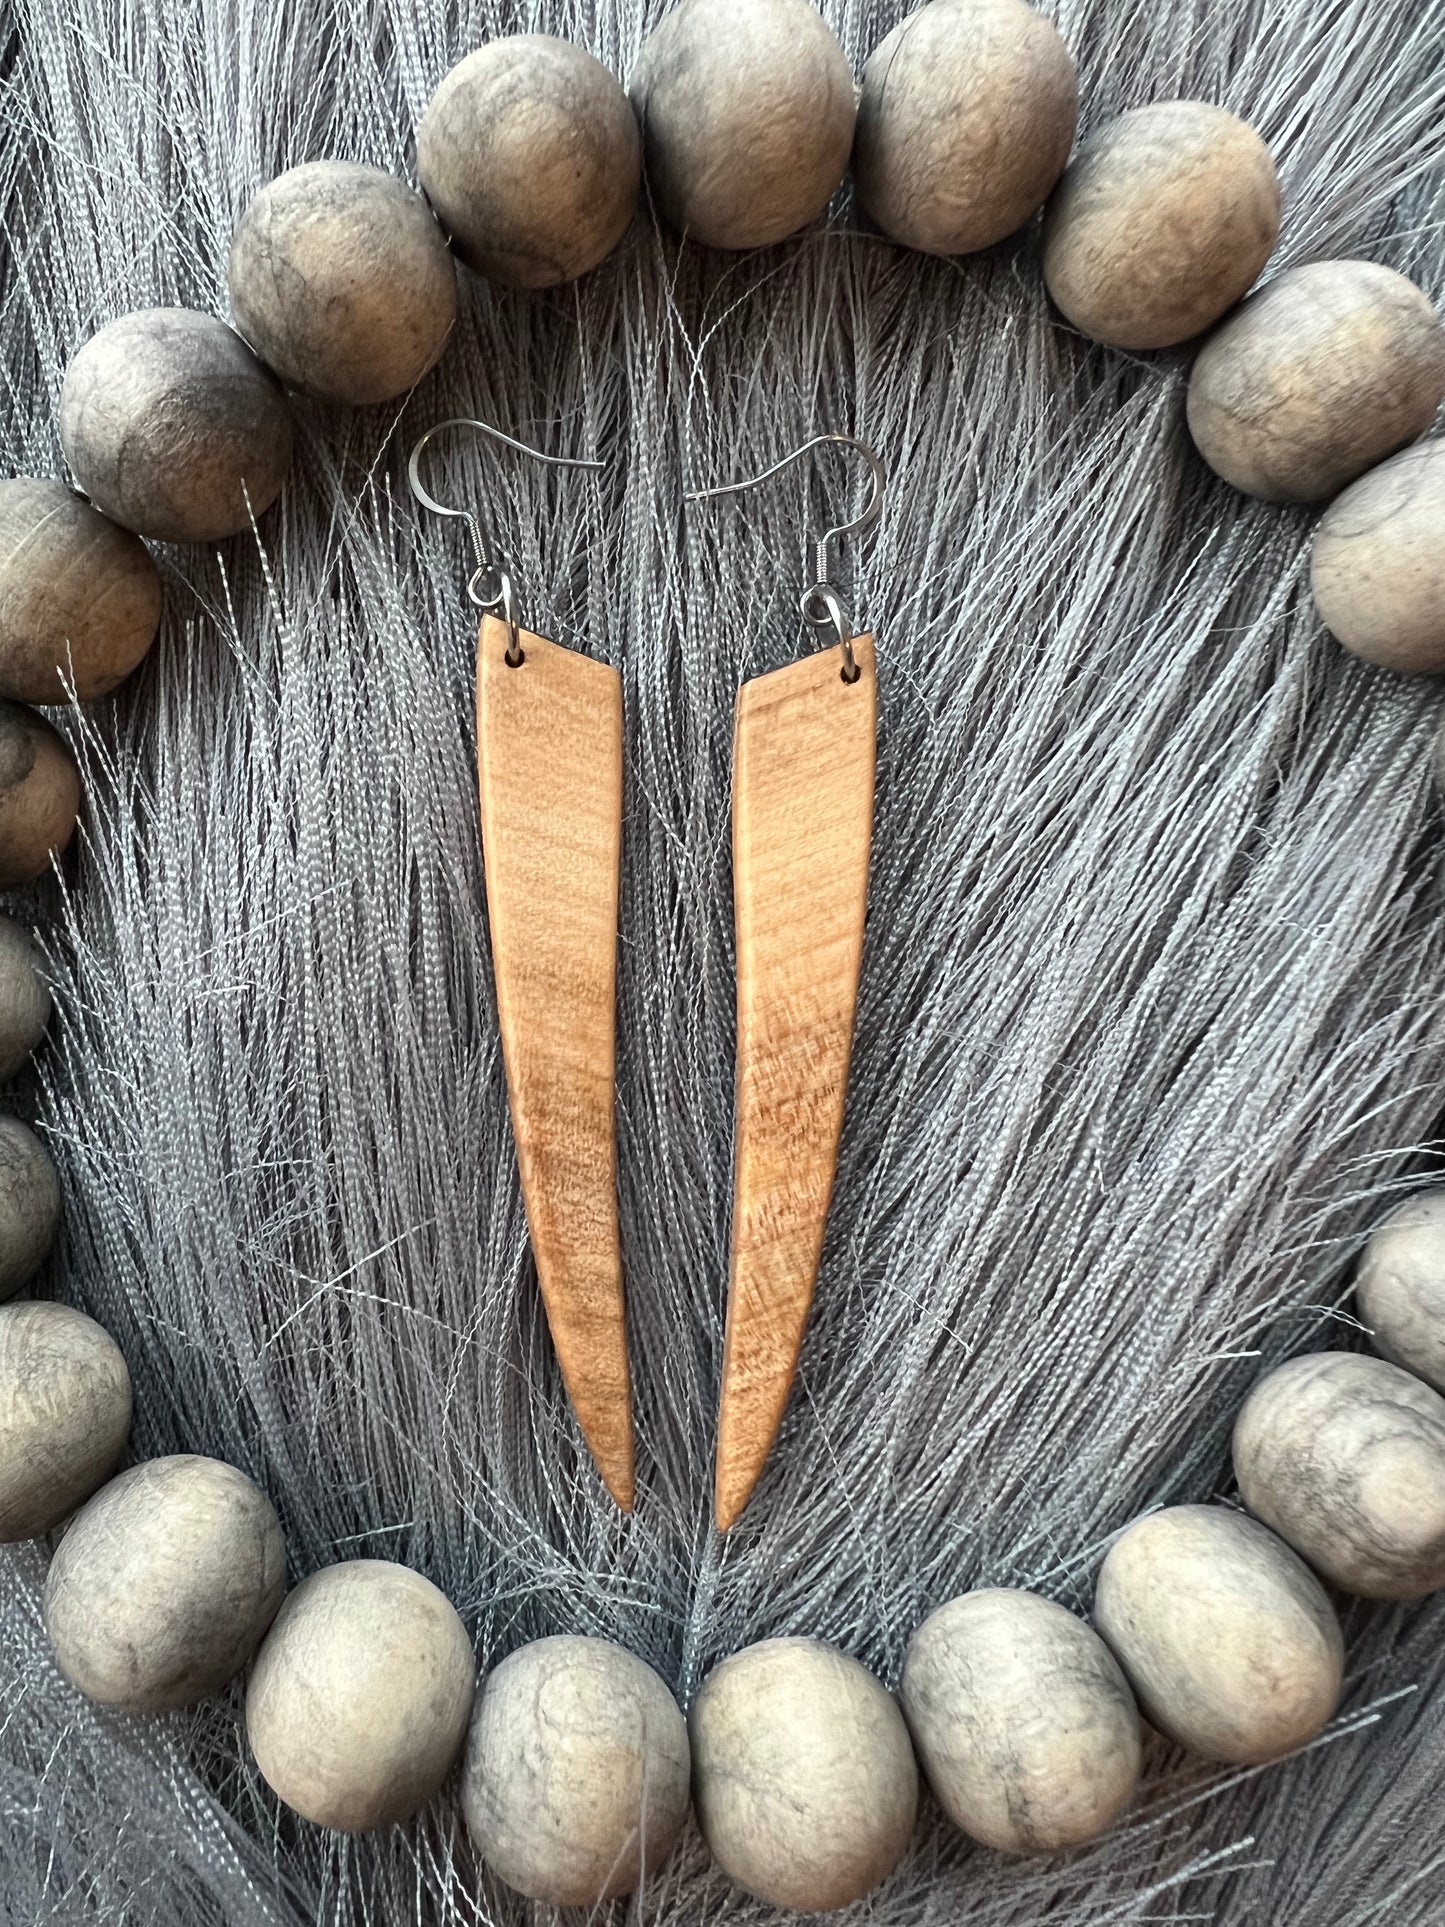 Natural wooden earrings